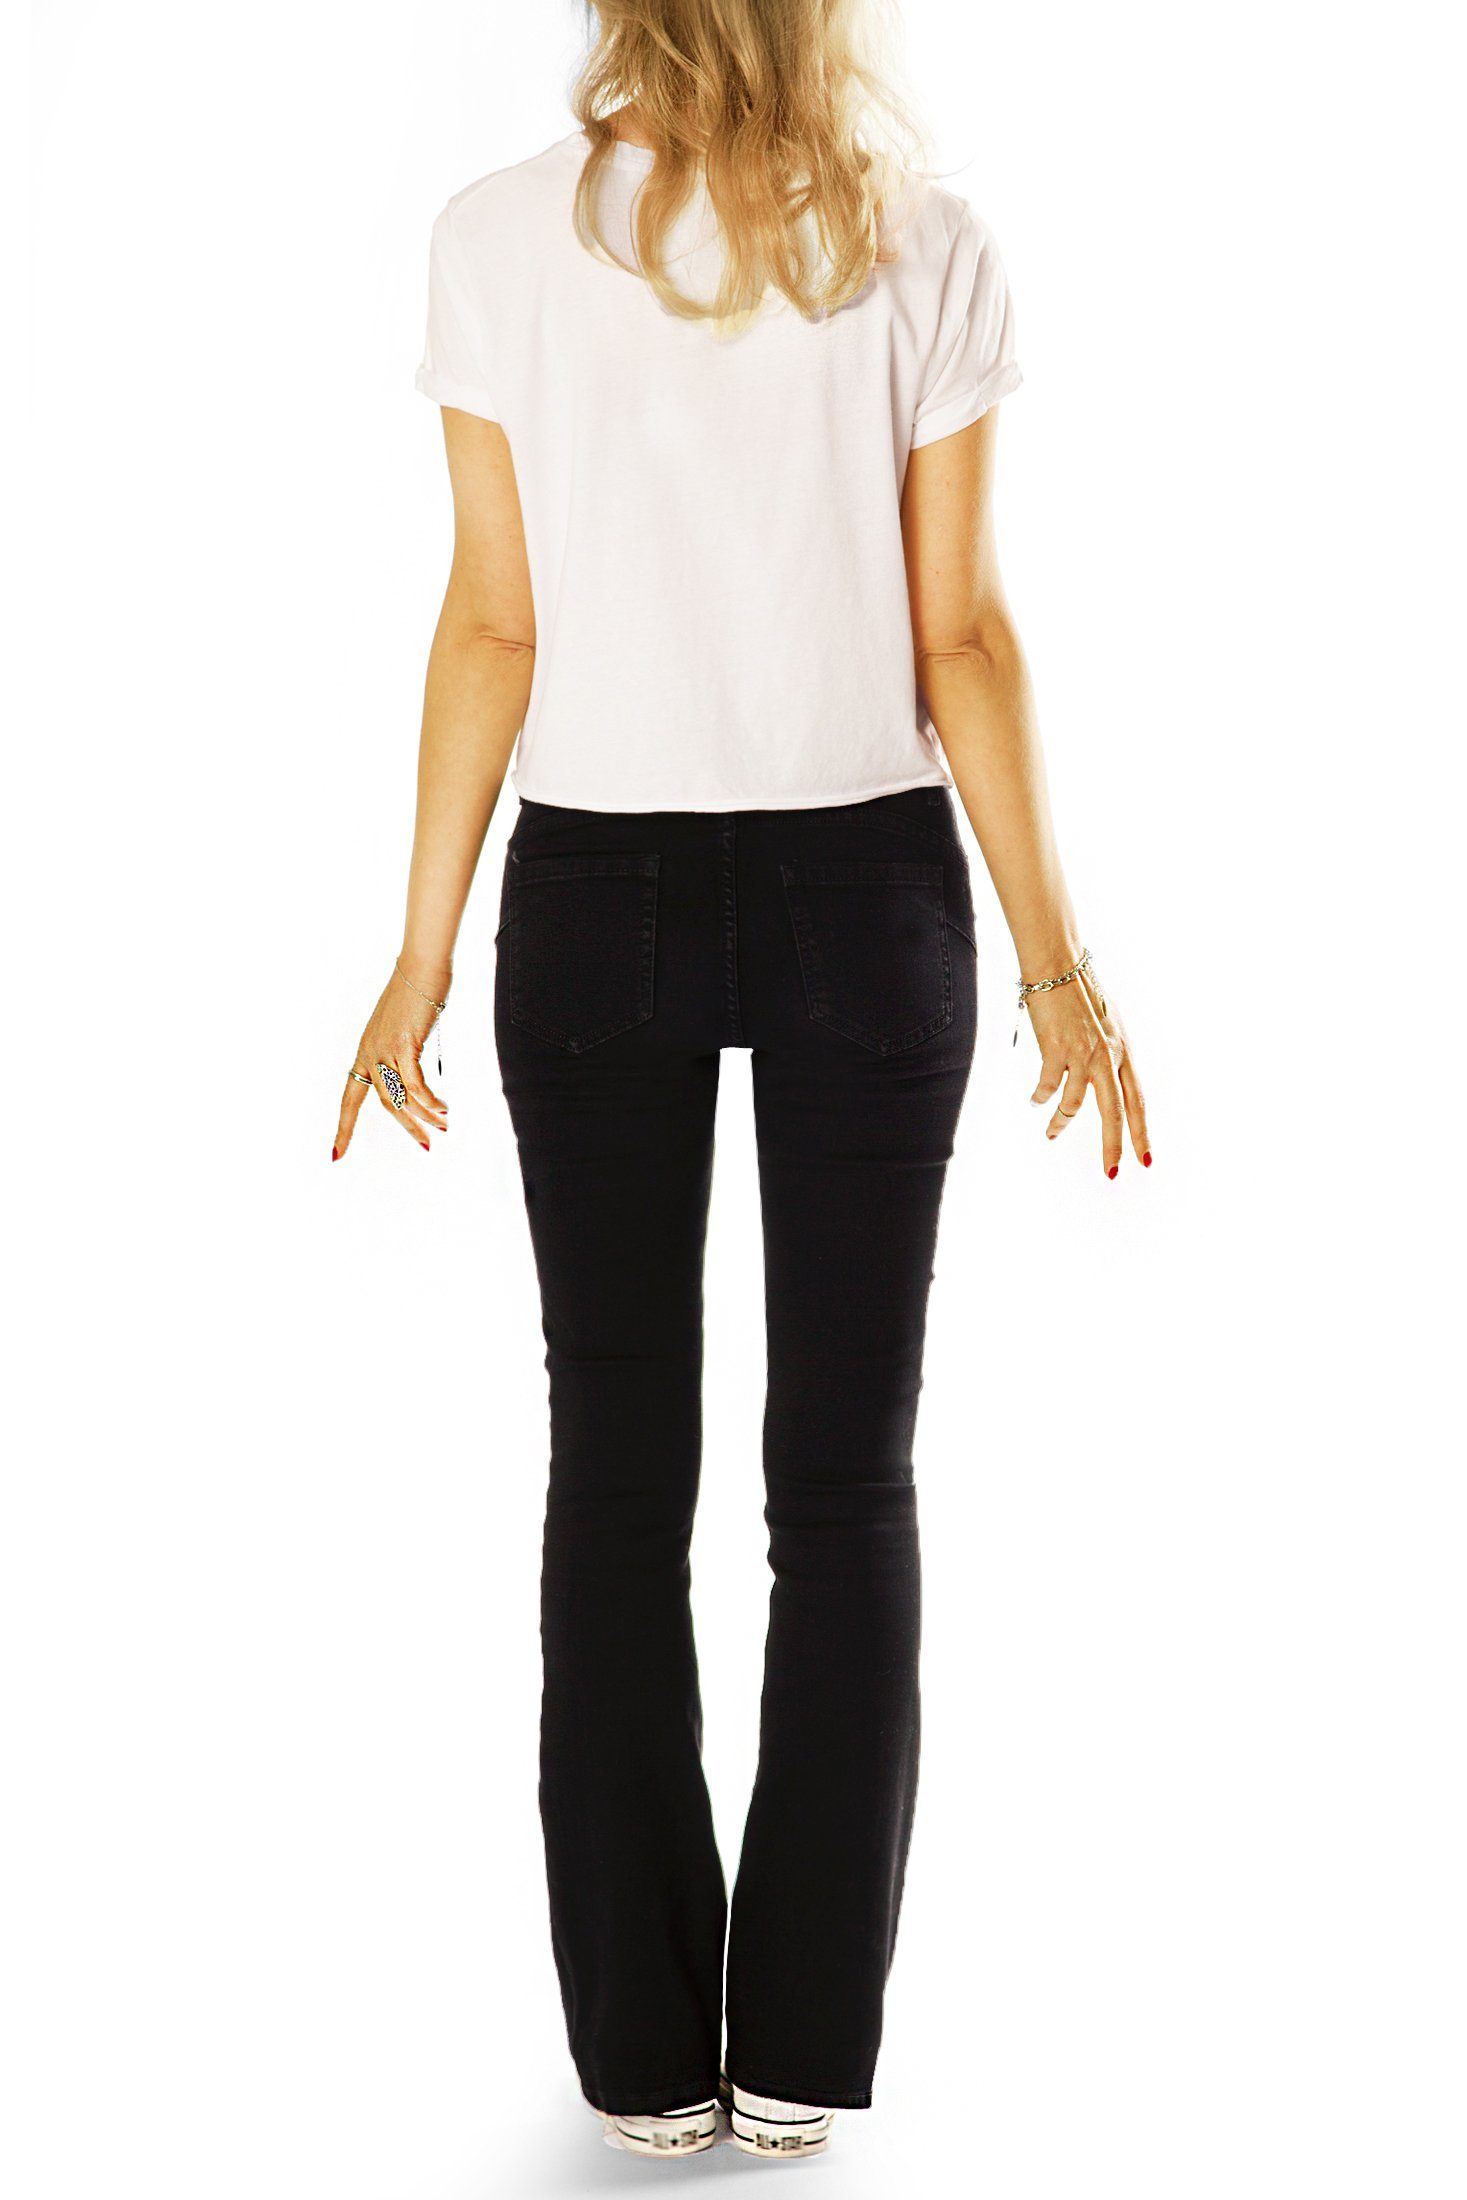 be styled Waist Basic waist, j2L-1 5-Pocket-Style, im Medium Schlag Damen Cut stretchig Stretch-Anteil, Boot Bootcut-Jeans Hose Jeans bequem, mit - medium